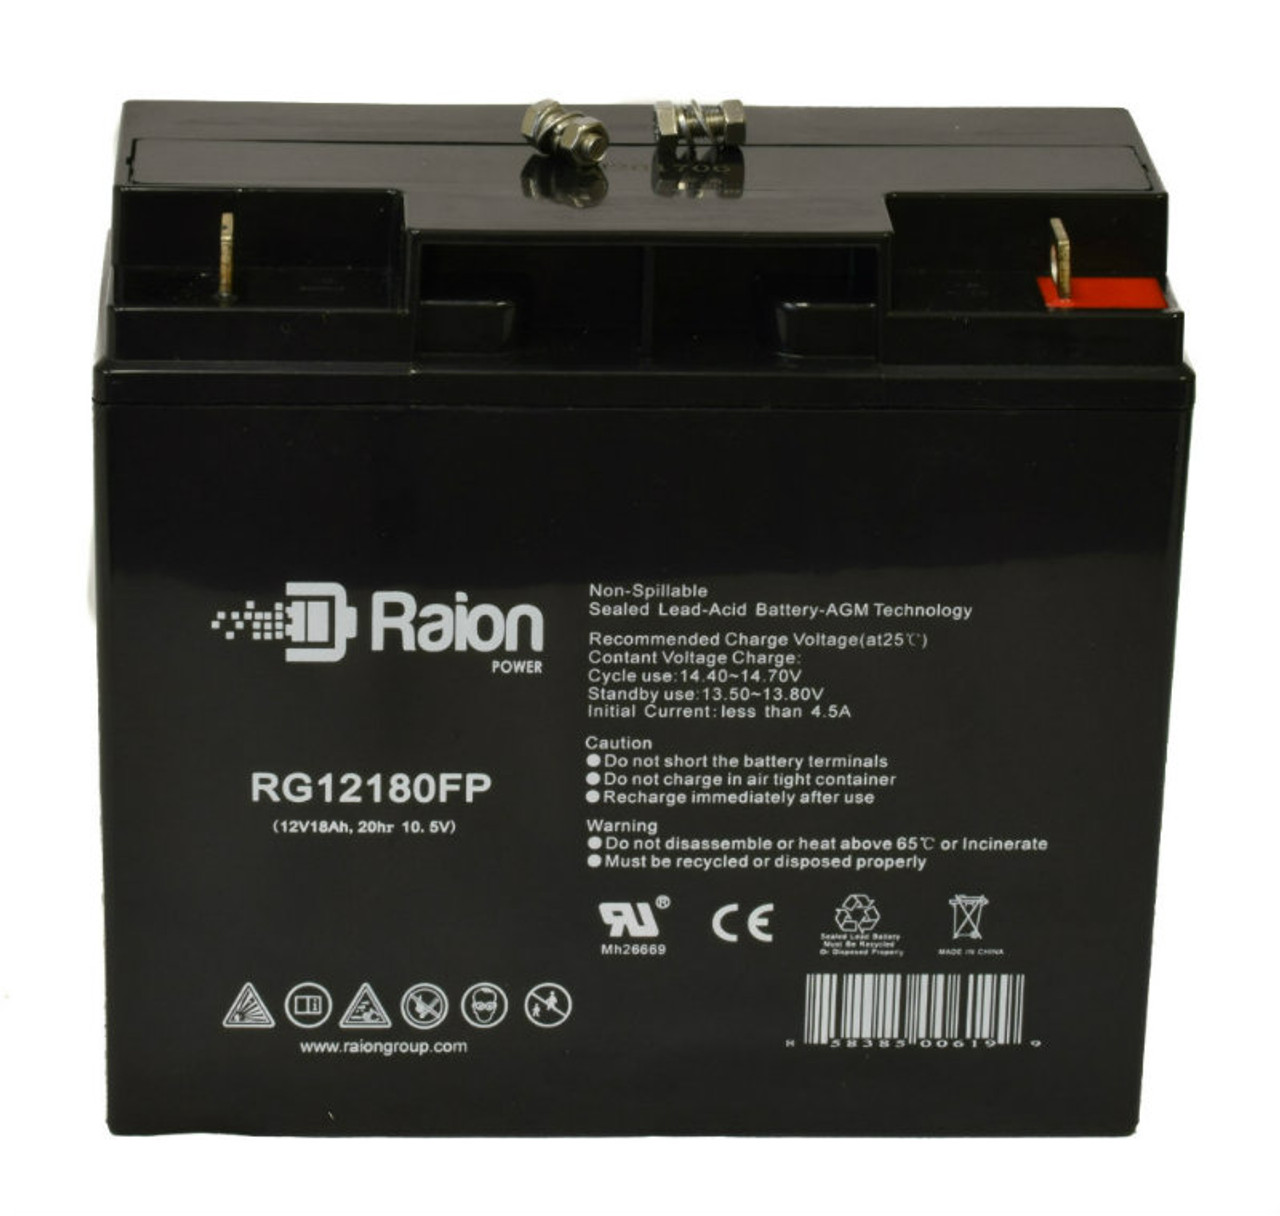 Raion Power RG12180FP 12V 18Ah Lead Acid Battery for Draeger Medical Apollo Anesthesia Machine